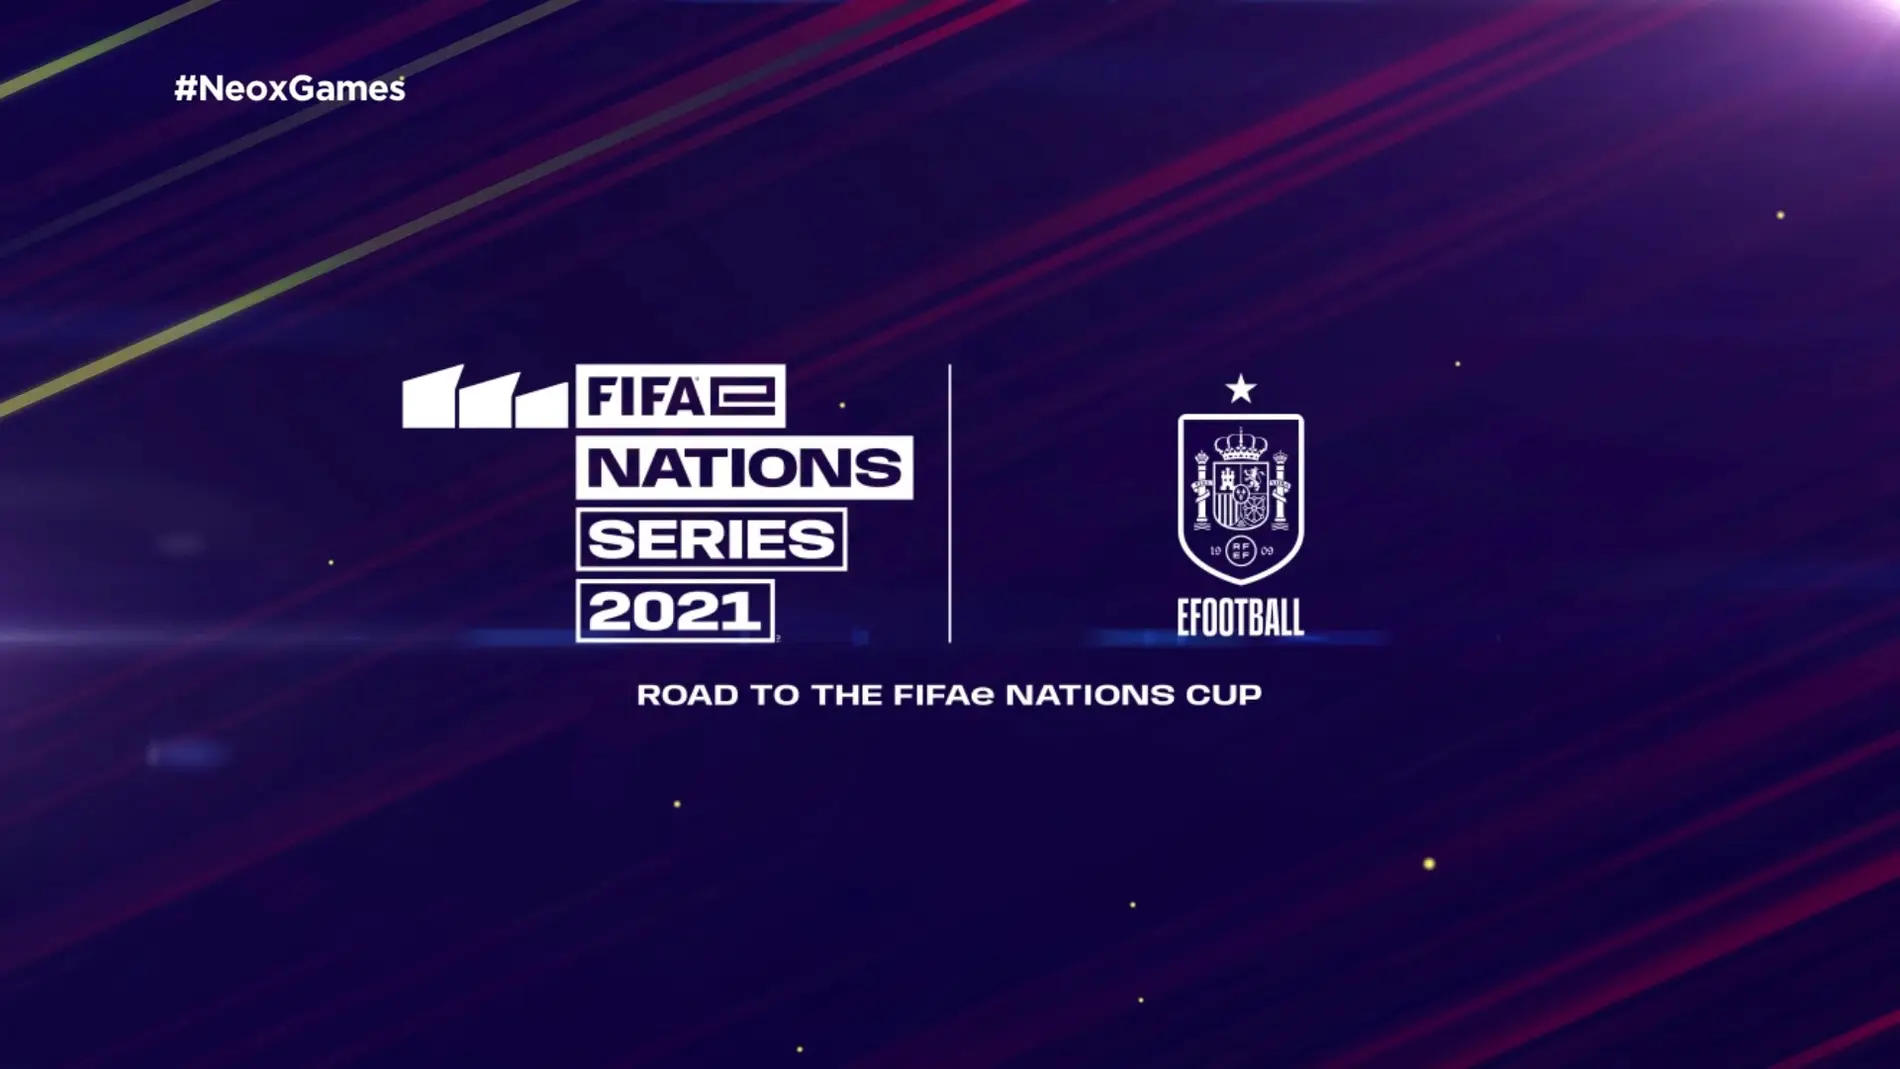 FIFA eNations Series 2021